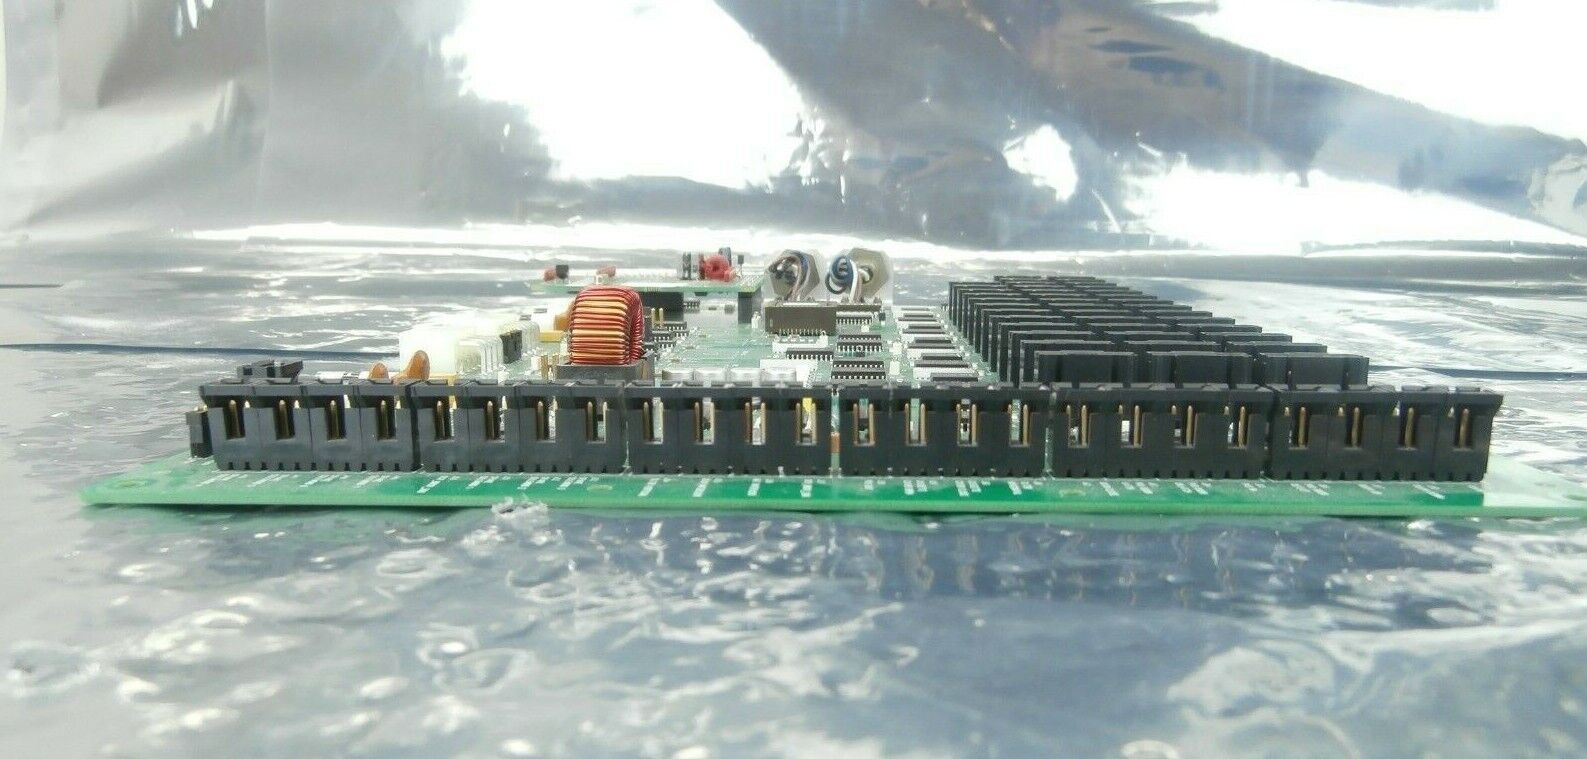 Electroglas 262411-001 Load Port Controller Board PCB 262410-001 Working Spare